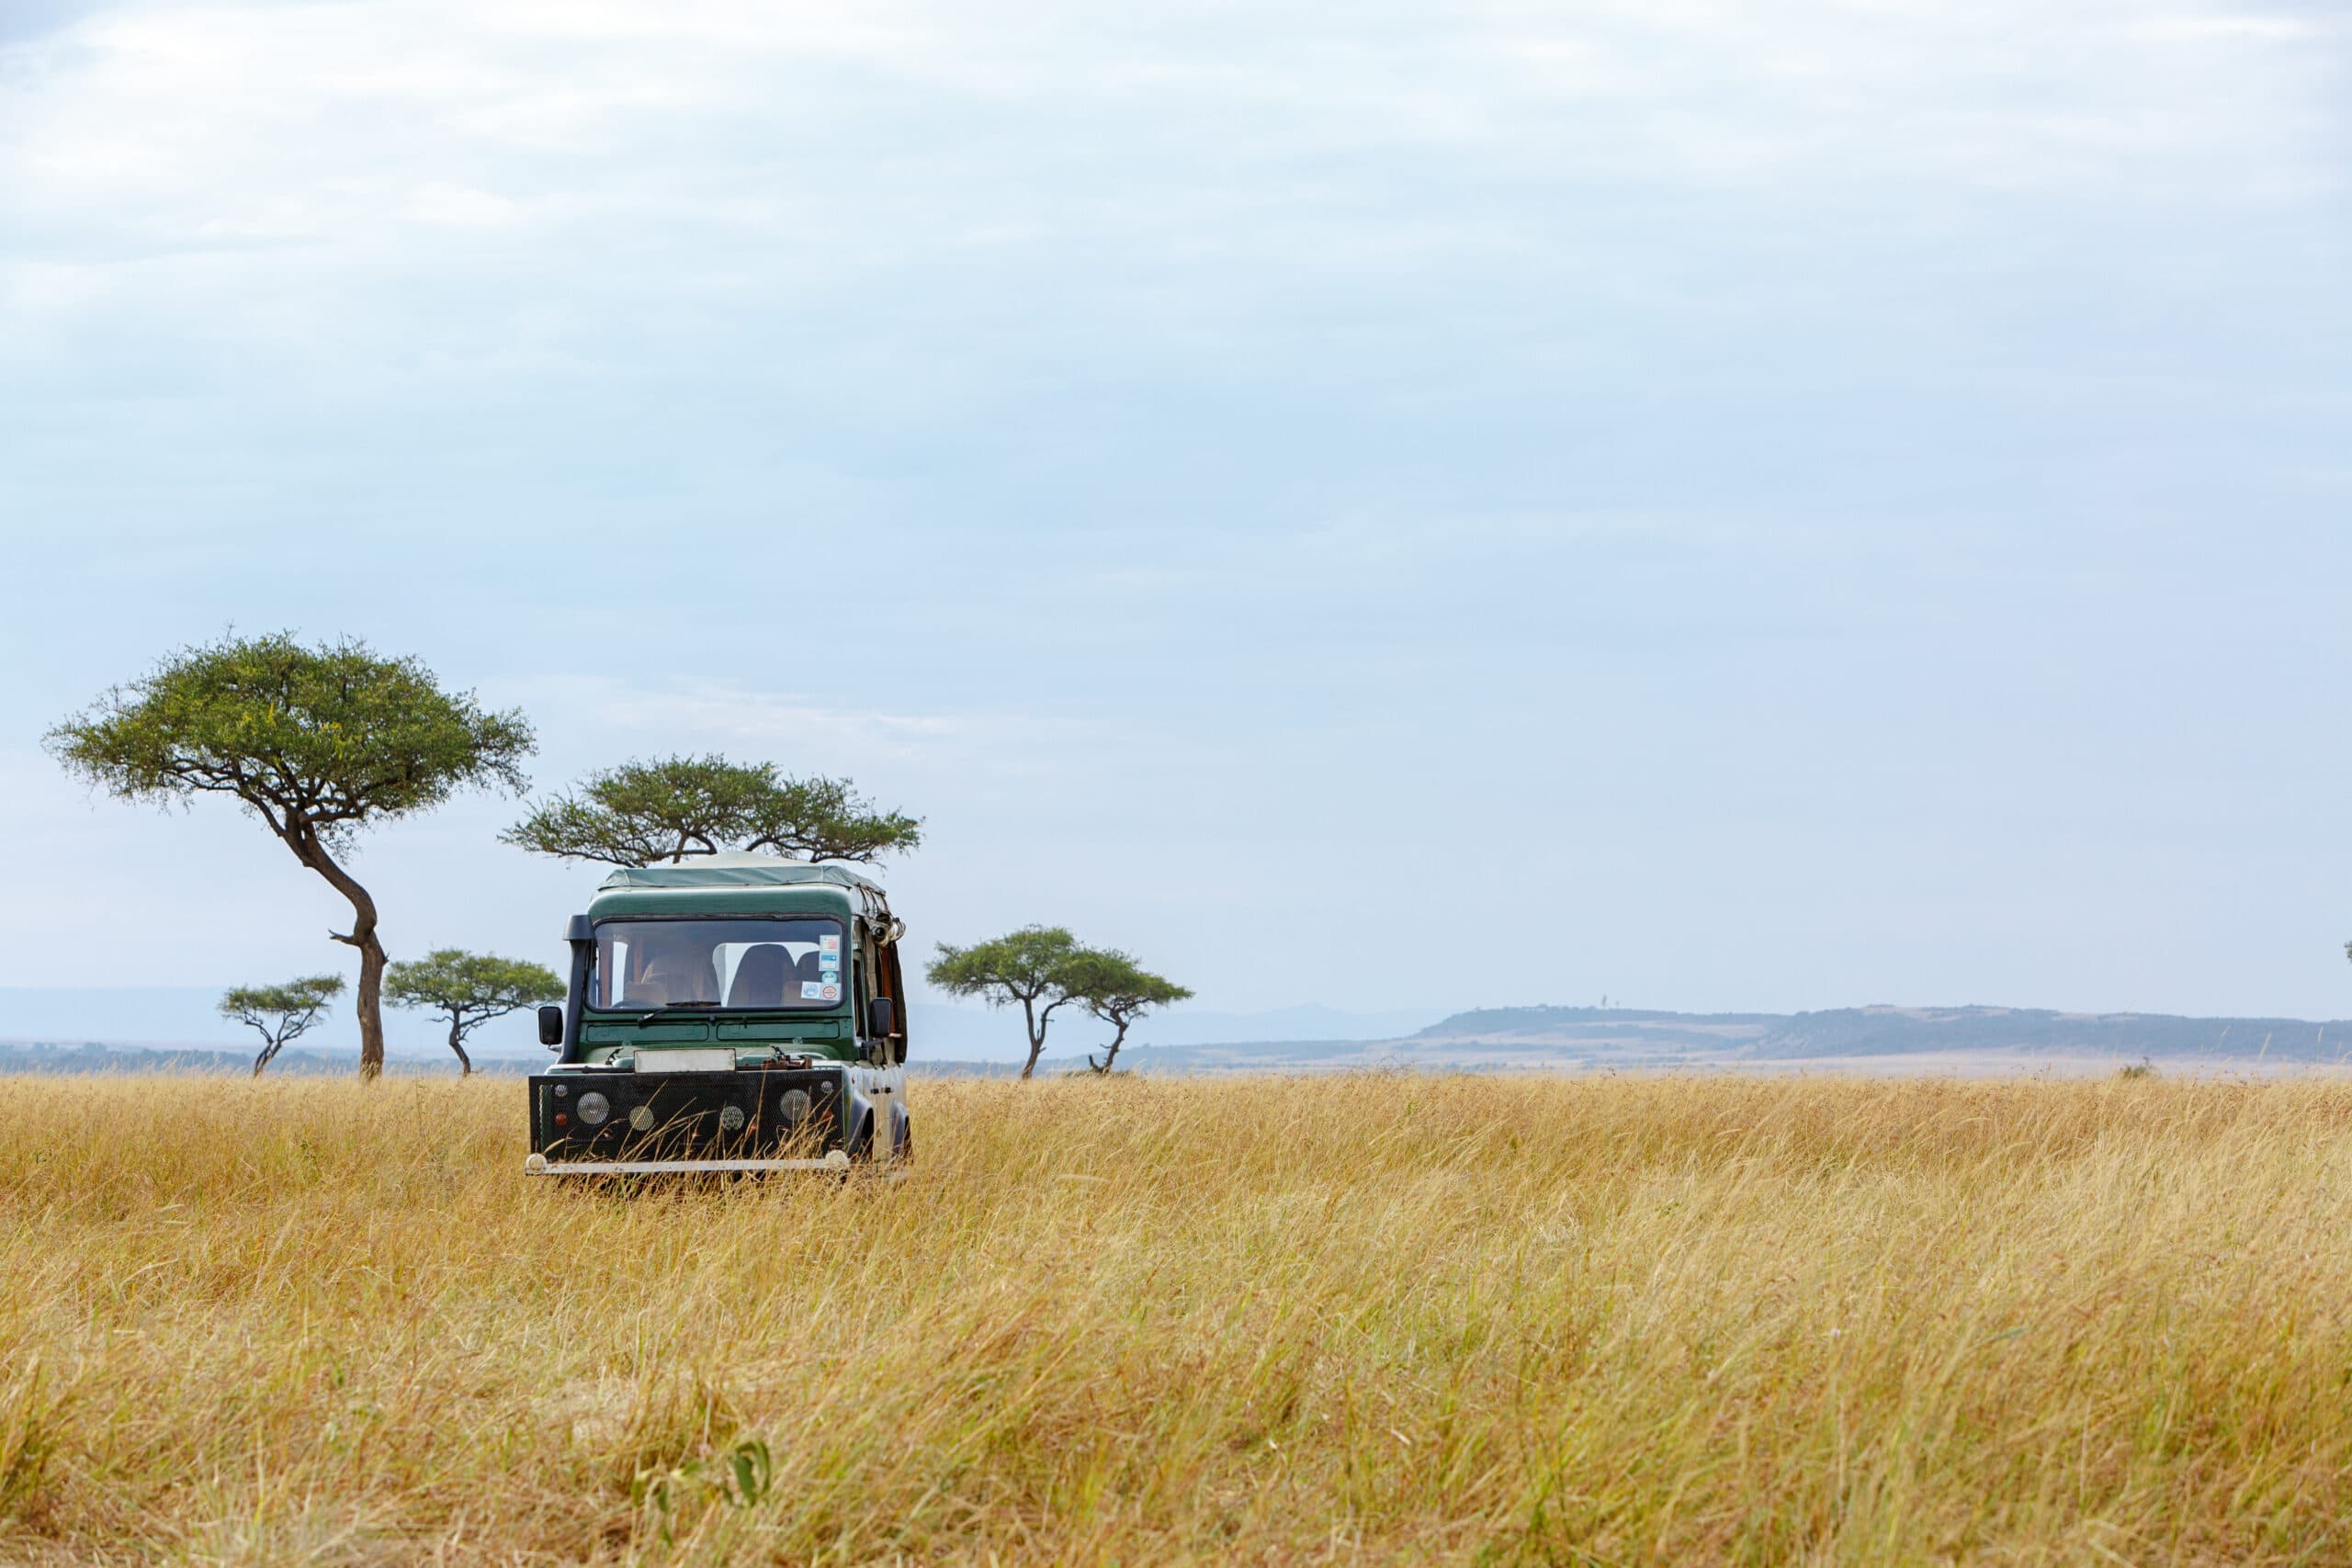 safari tour vehicle in kenya grasslands 2022 06 17 23 17 50 utc scaled